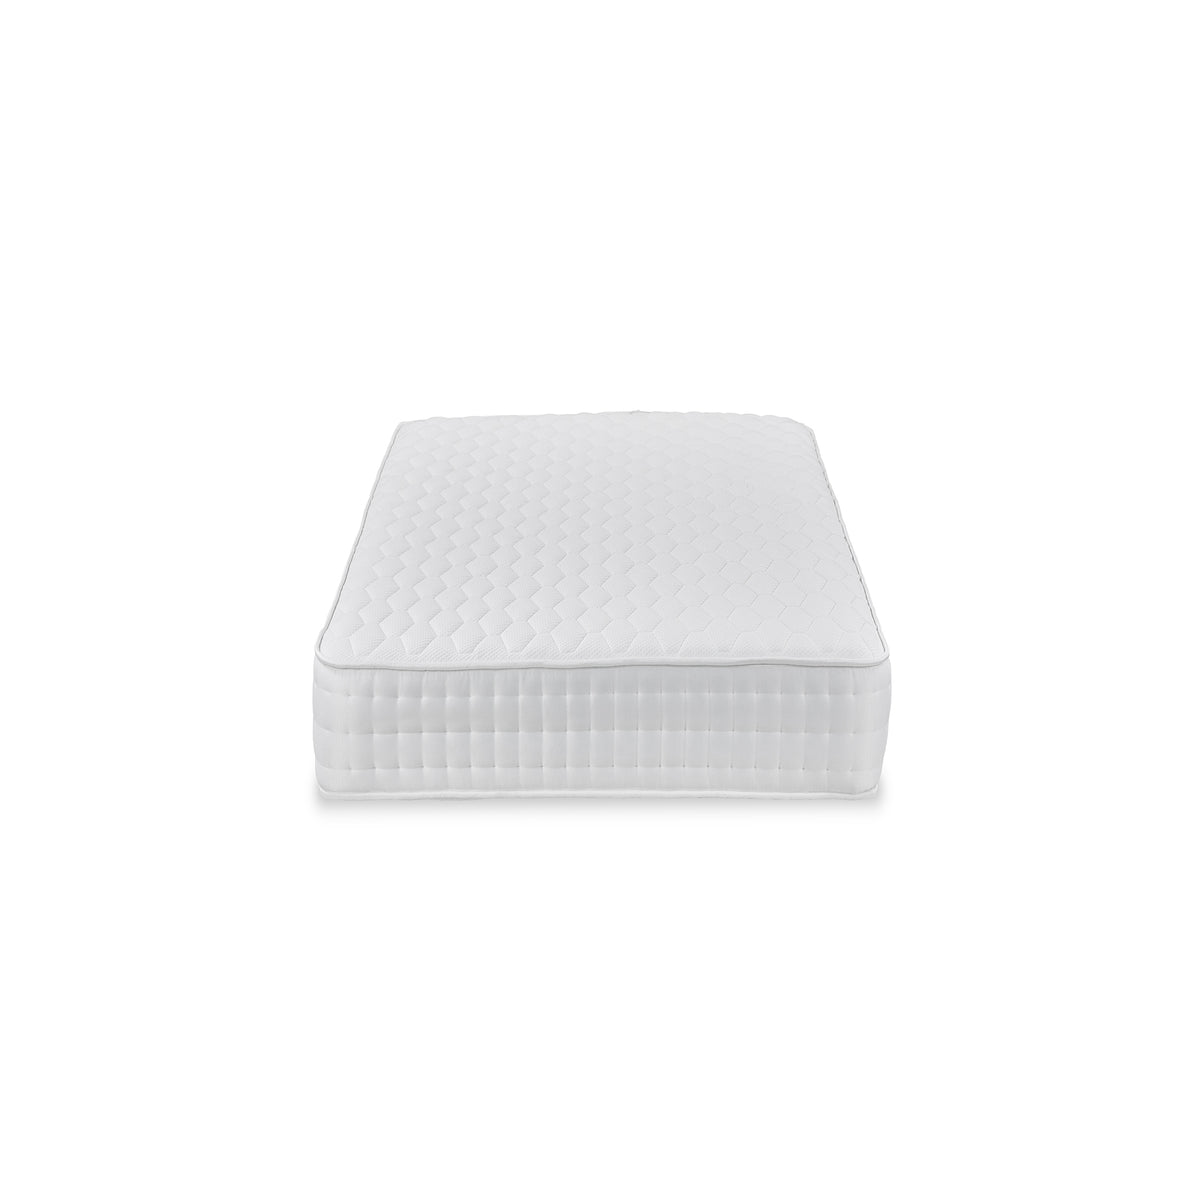 Roseland Sleep Classic Pocket Sprung Memory Foam Quilted Mattress 3ft single